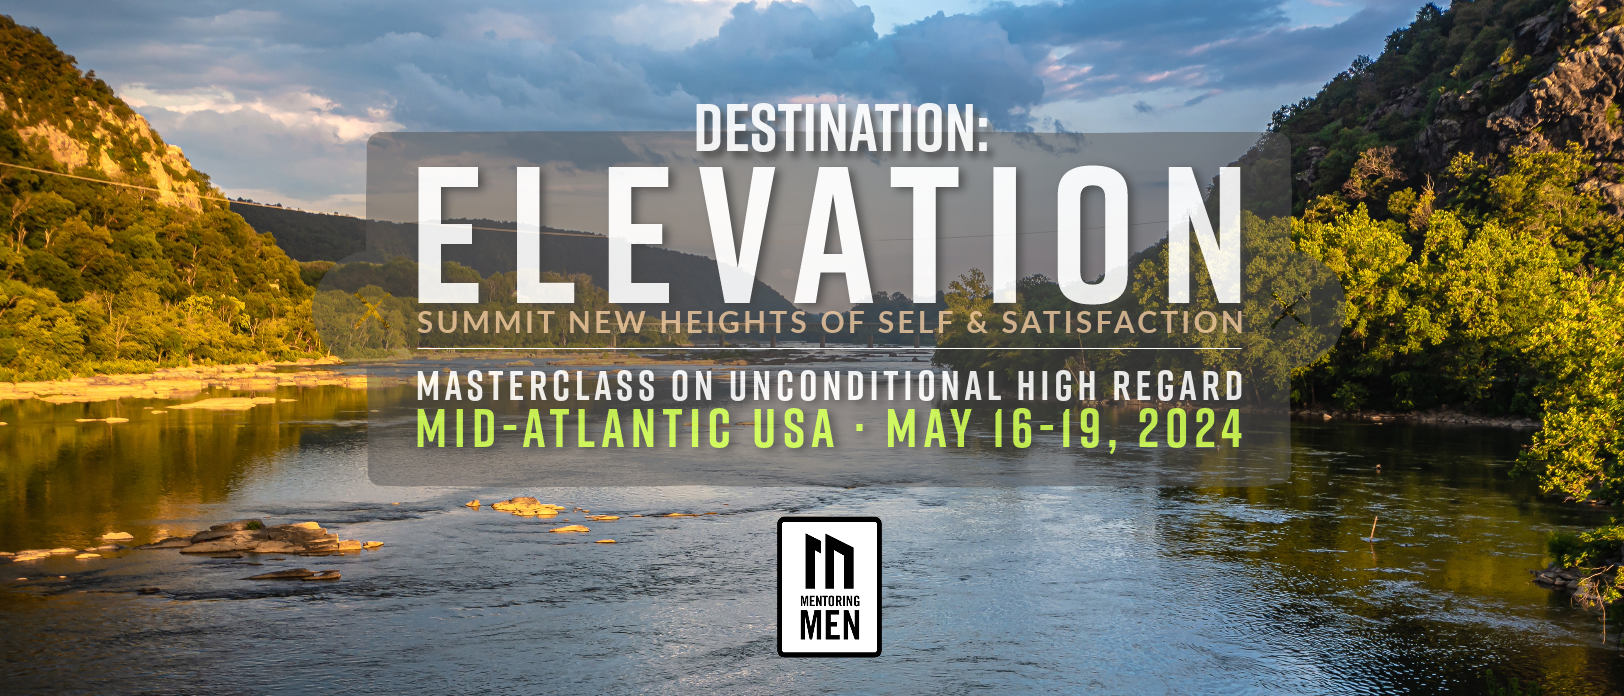 Destination: Elevation (mid-Atlantic, USA): A Masterclass Summit on Unconditional High Regard.